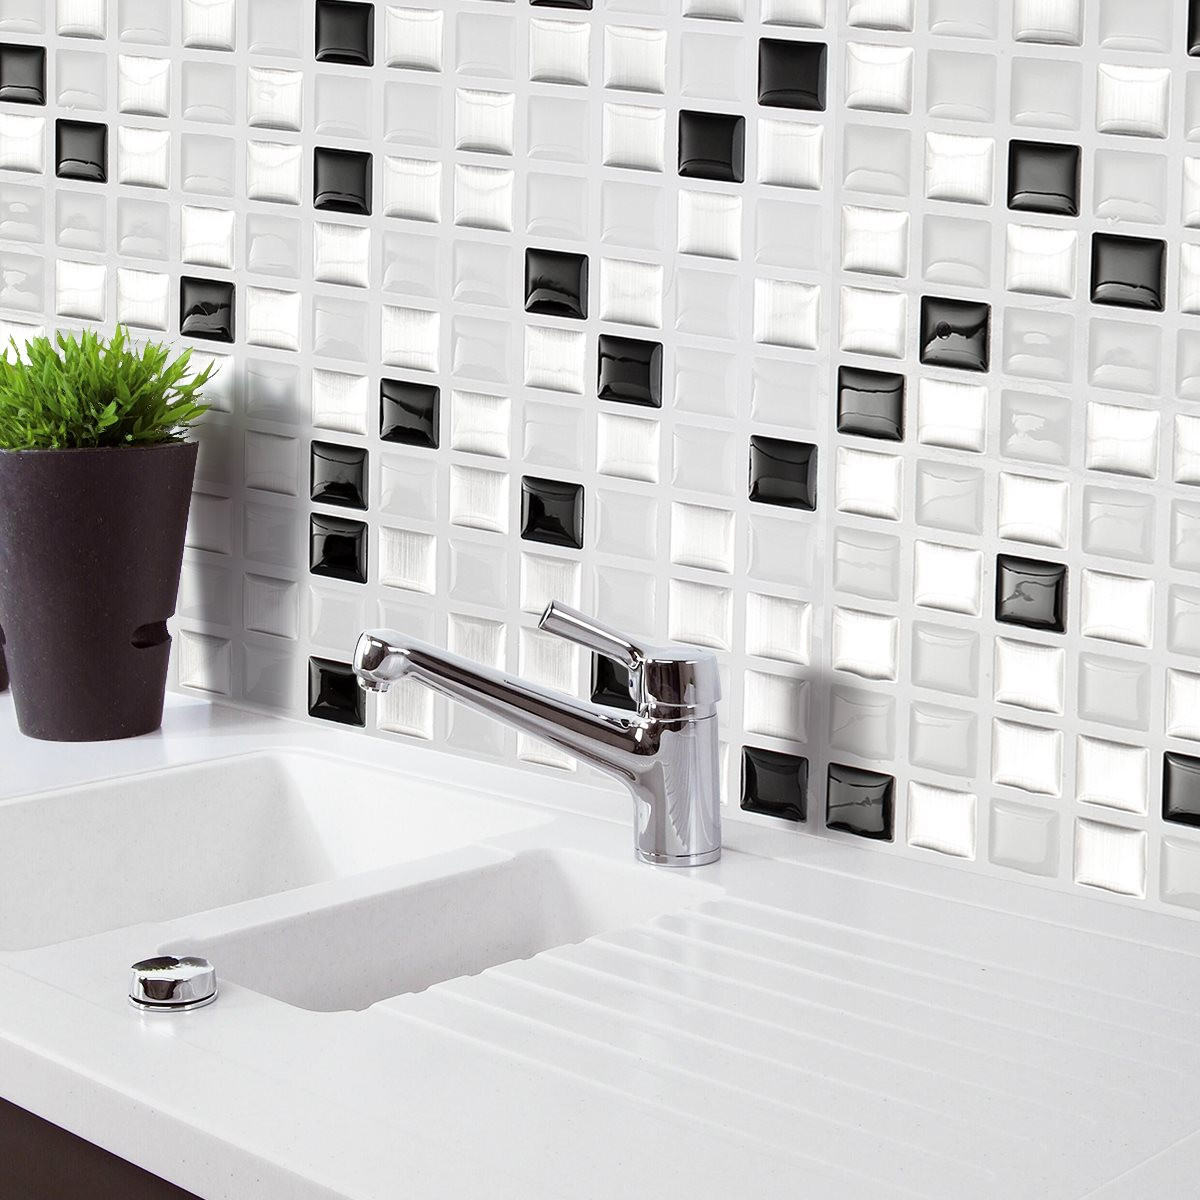 Bathroom Tile Wallpaper
 Home Decor Brick Mosaic Kitchen Bathroom Foil Beauty 3D